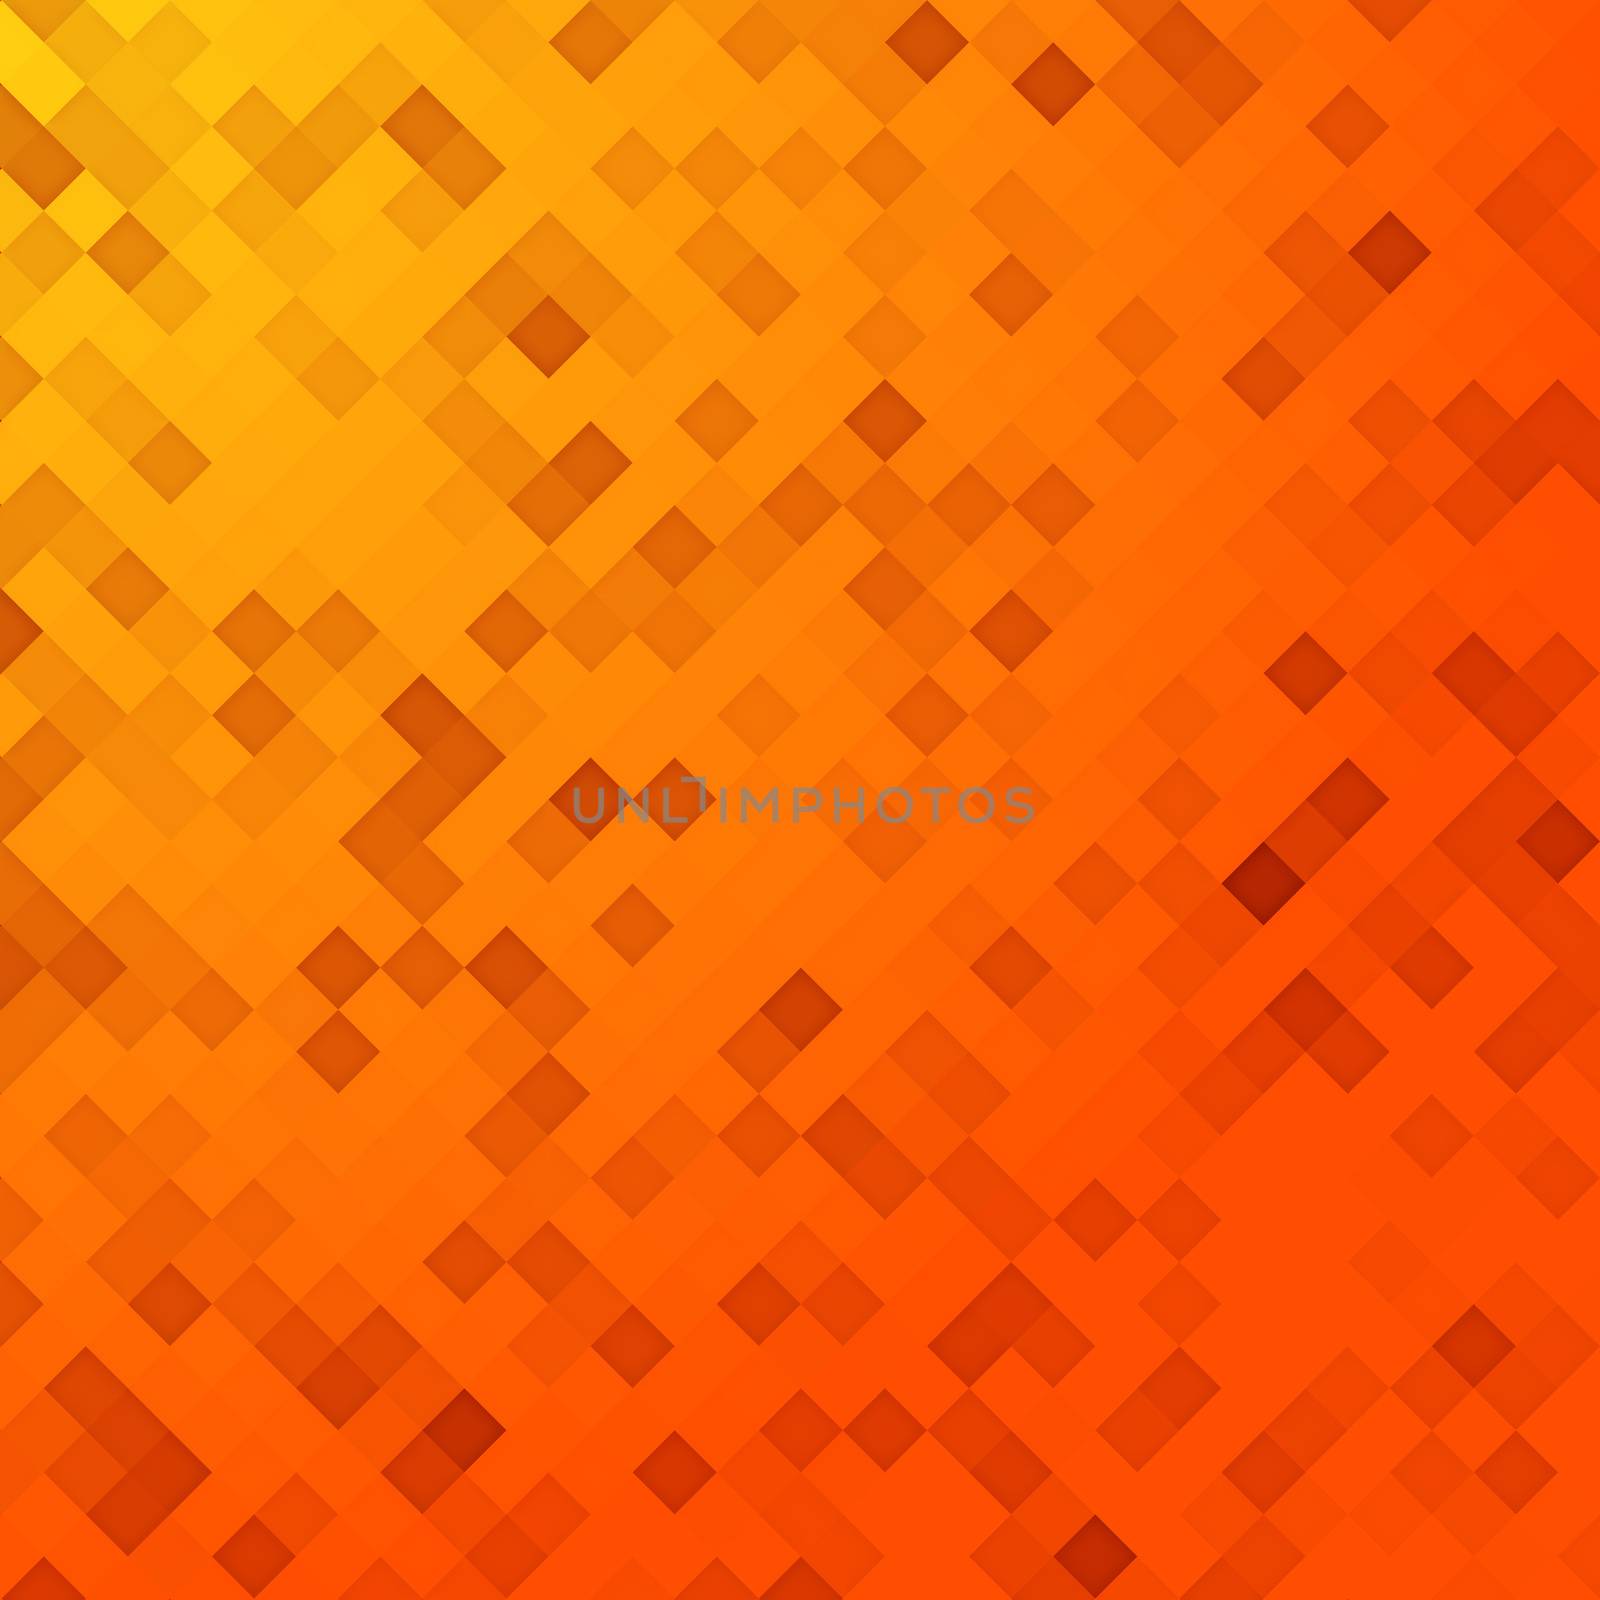 An illustration of an orange pixel background